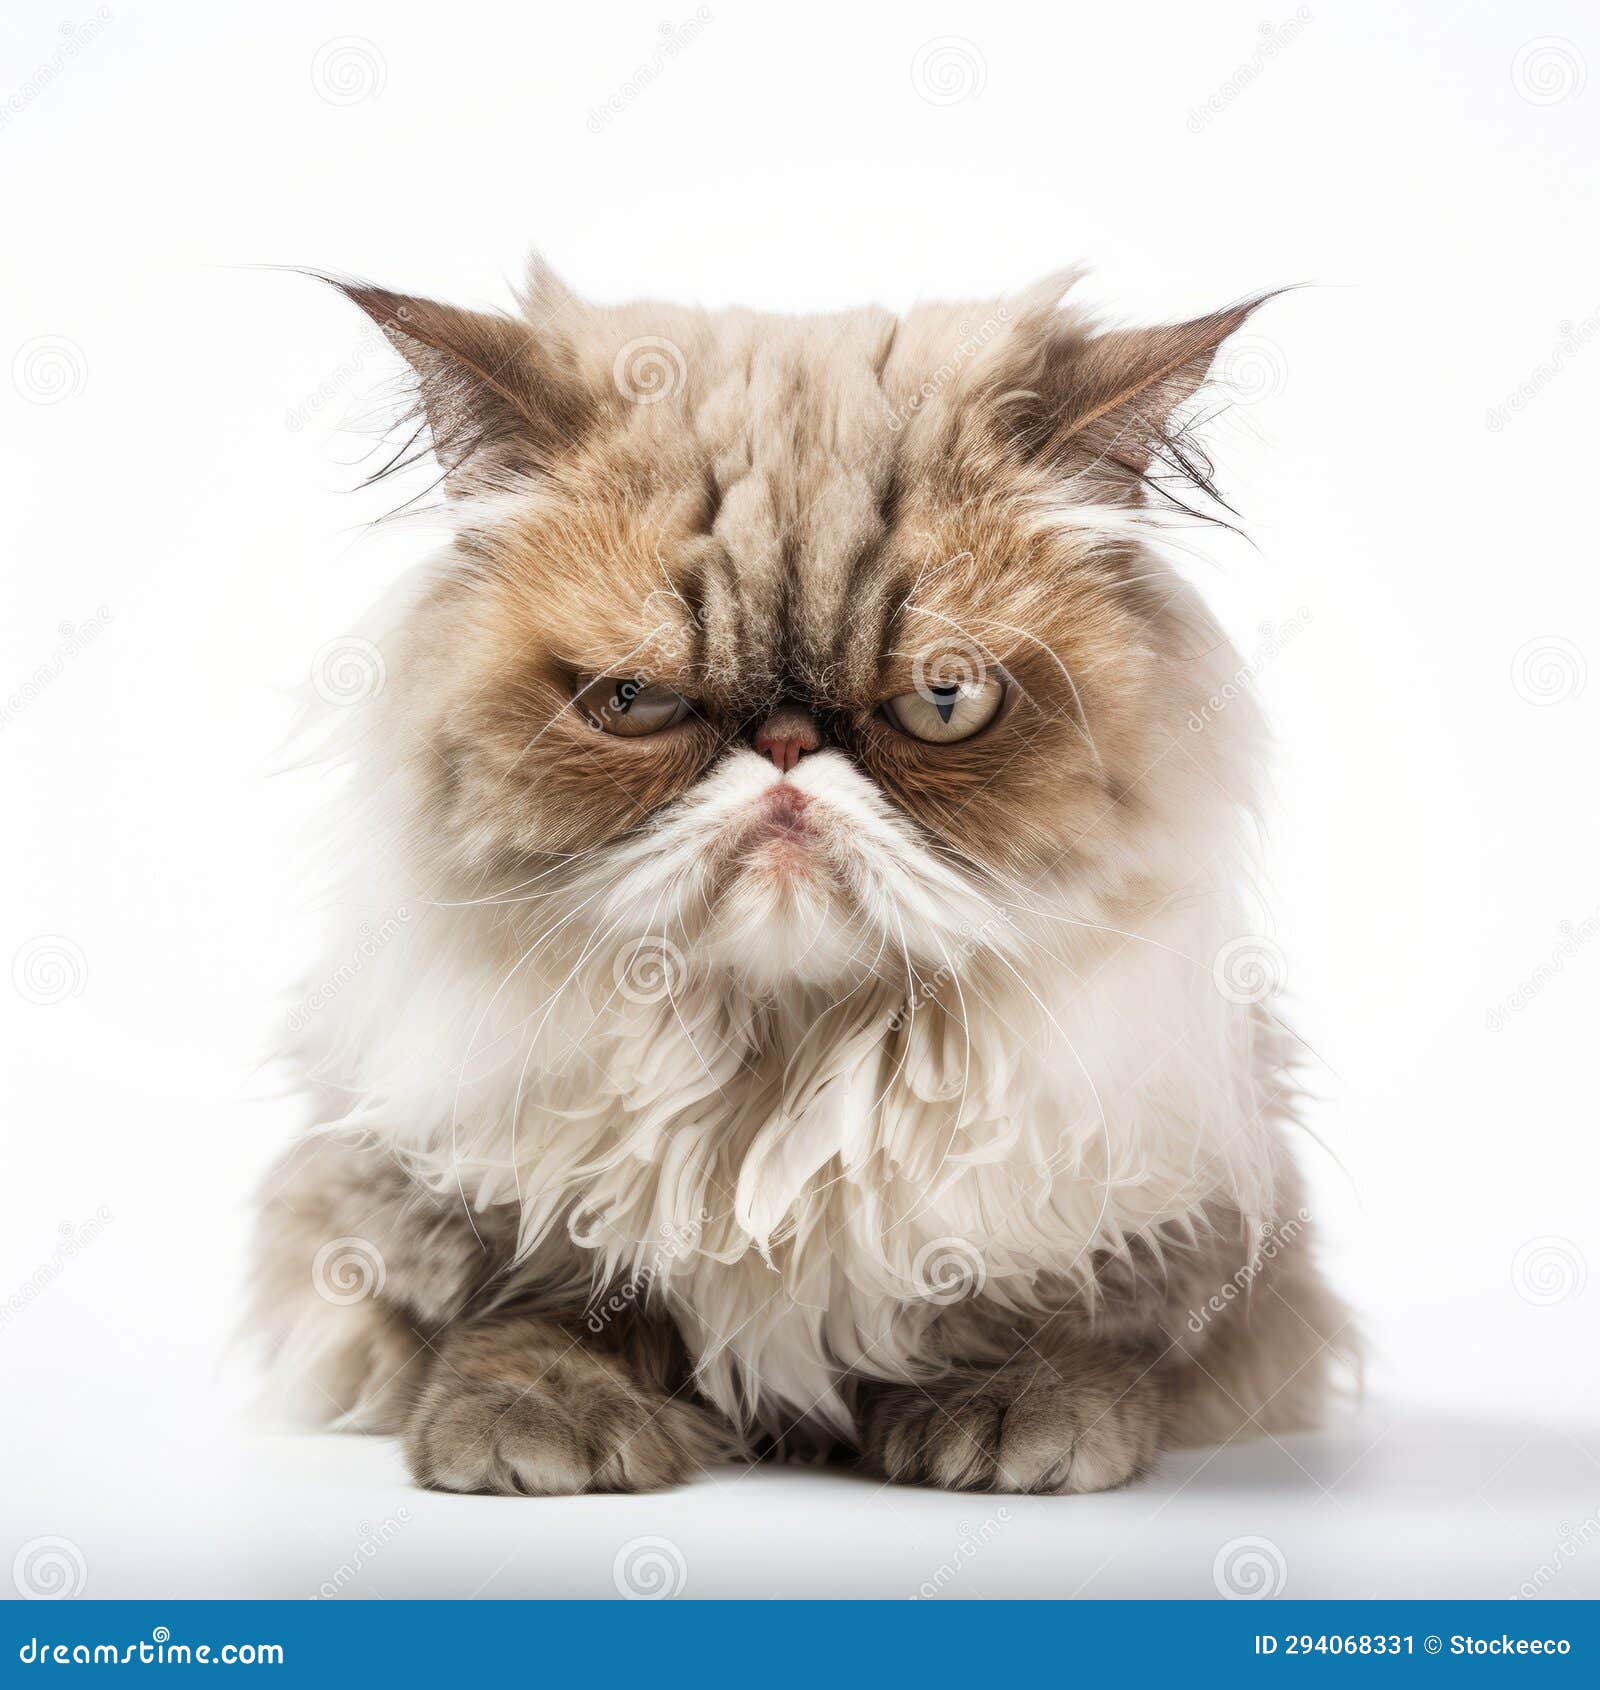 grumpy stray cat in white background